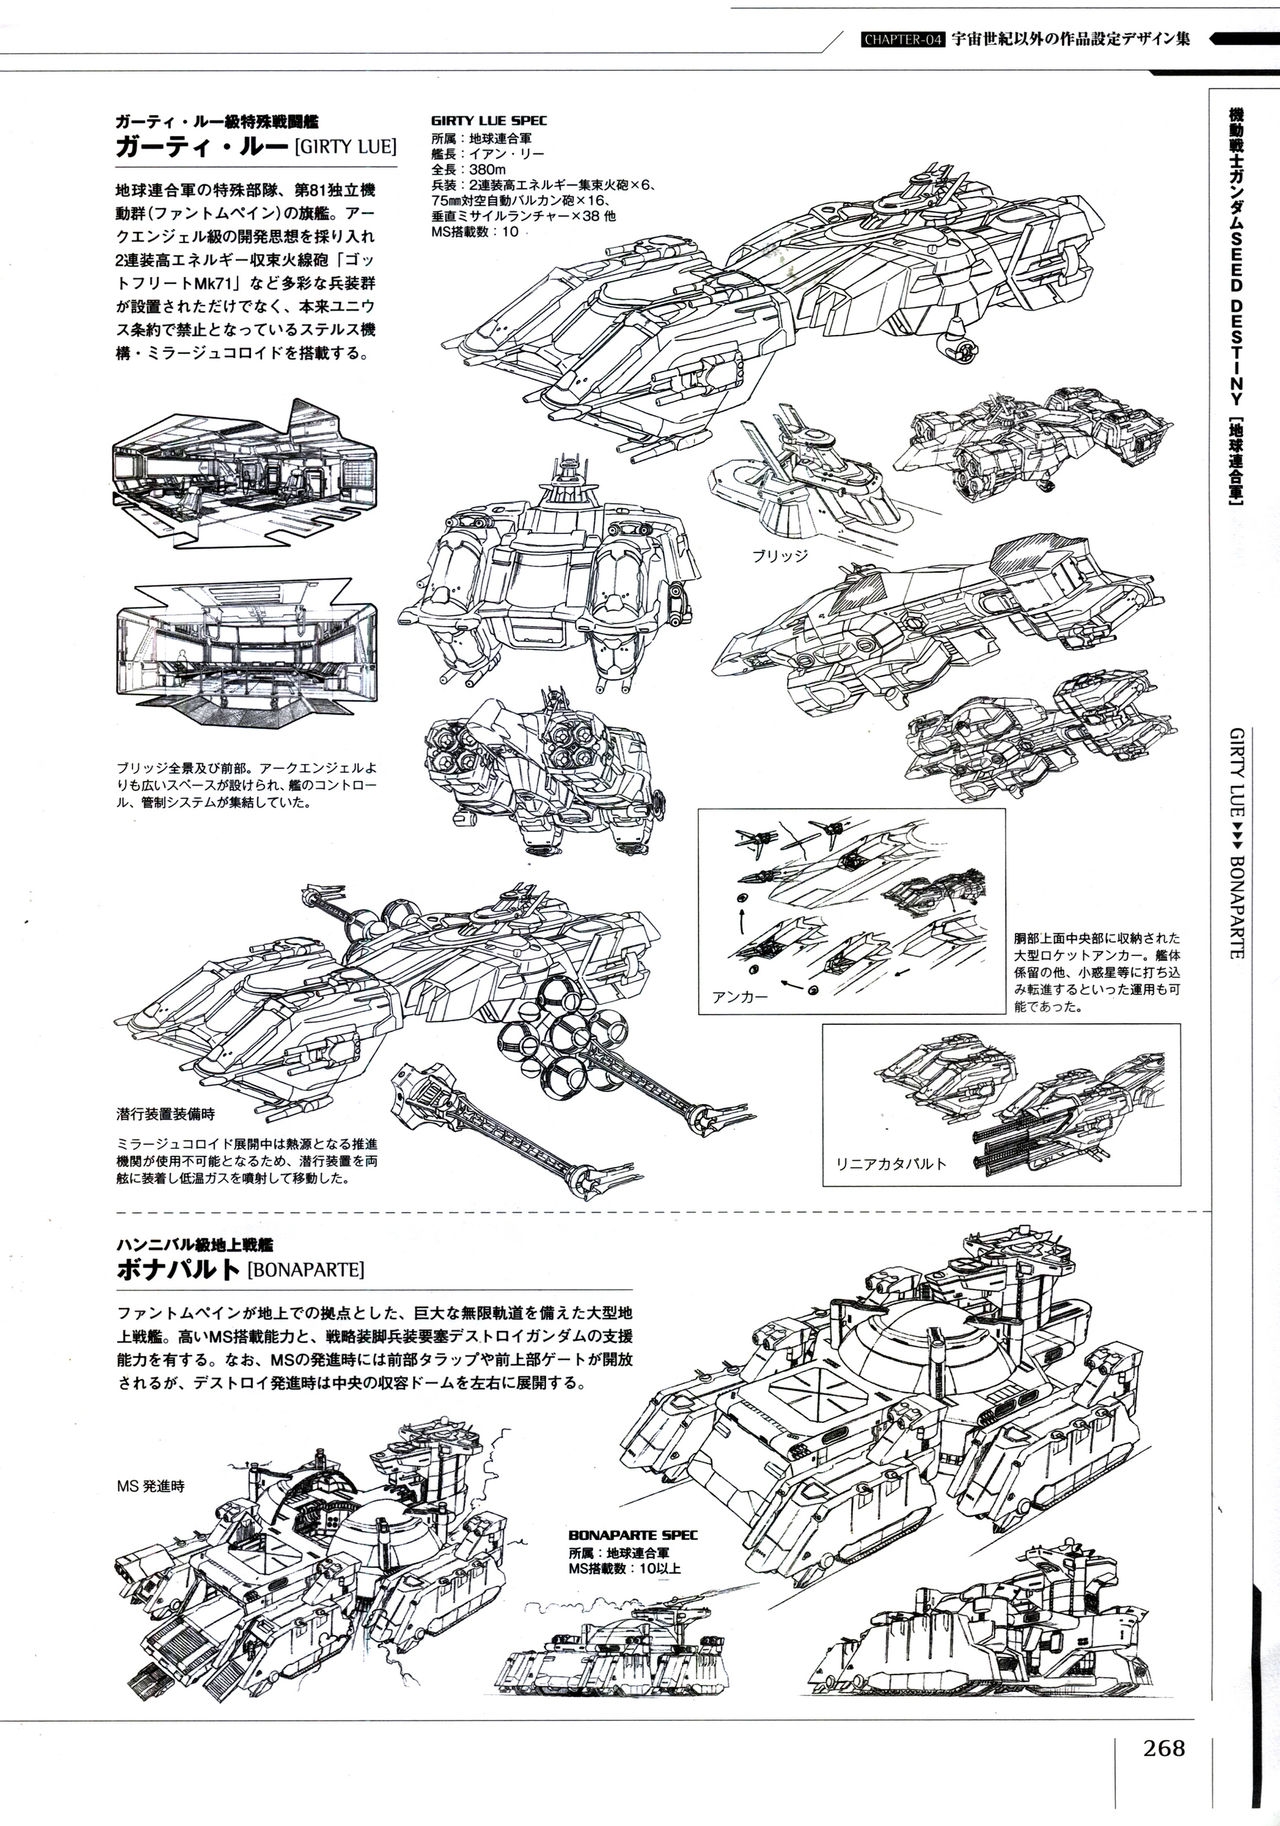 Mobile Suit Gundam - Ship & Aerospace Plane Encyclopedia - Revised Edition 273